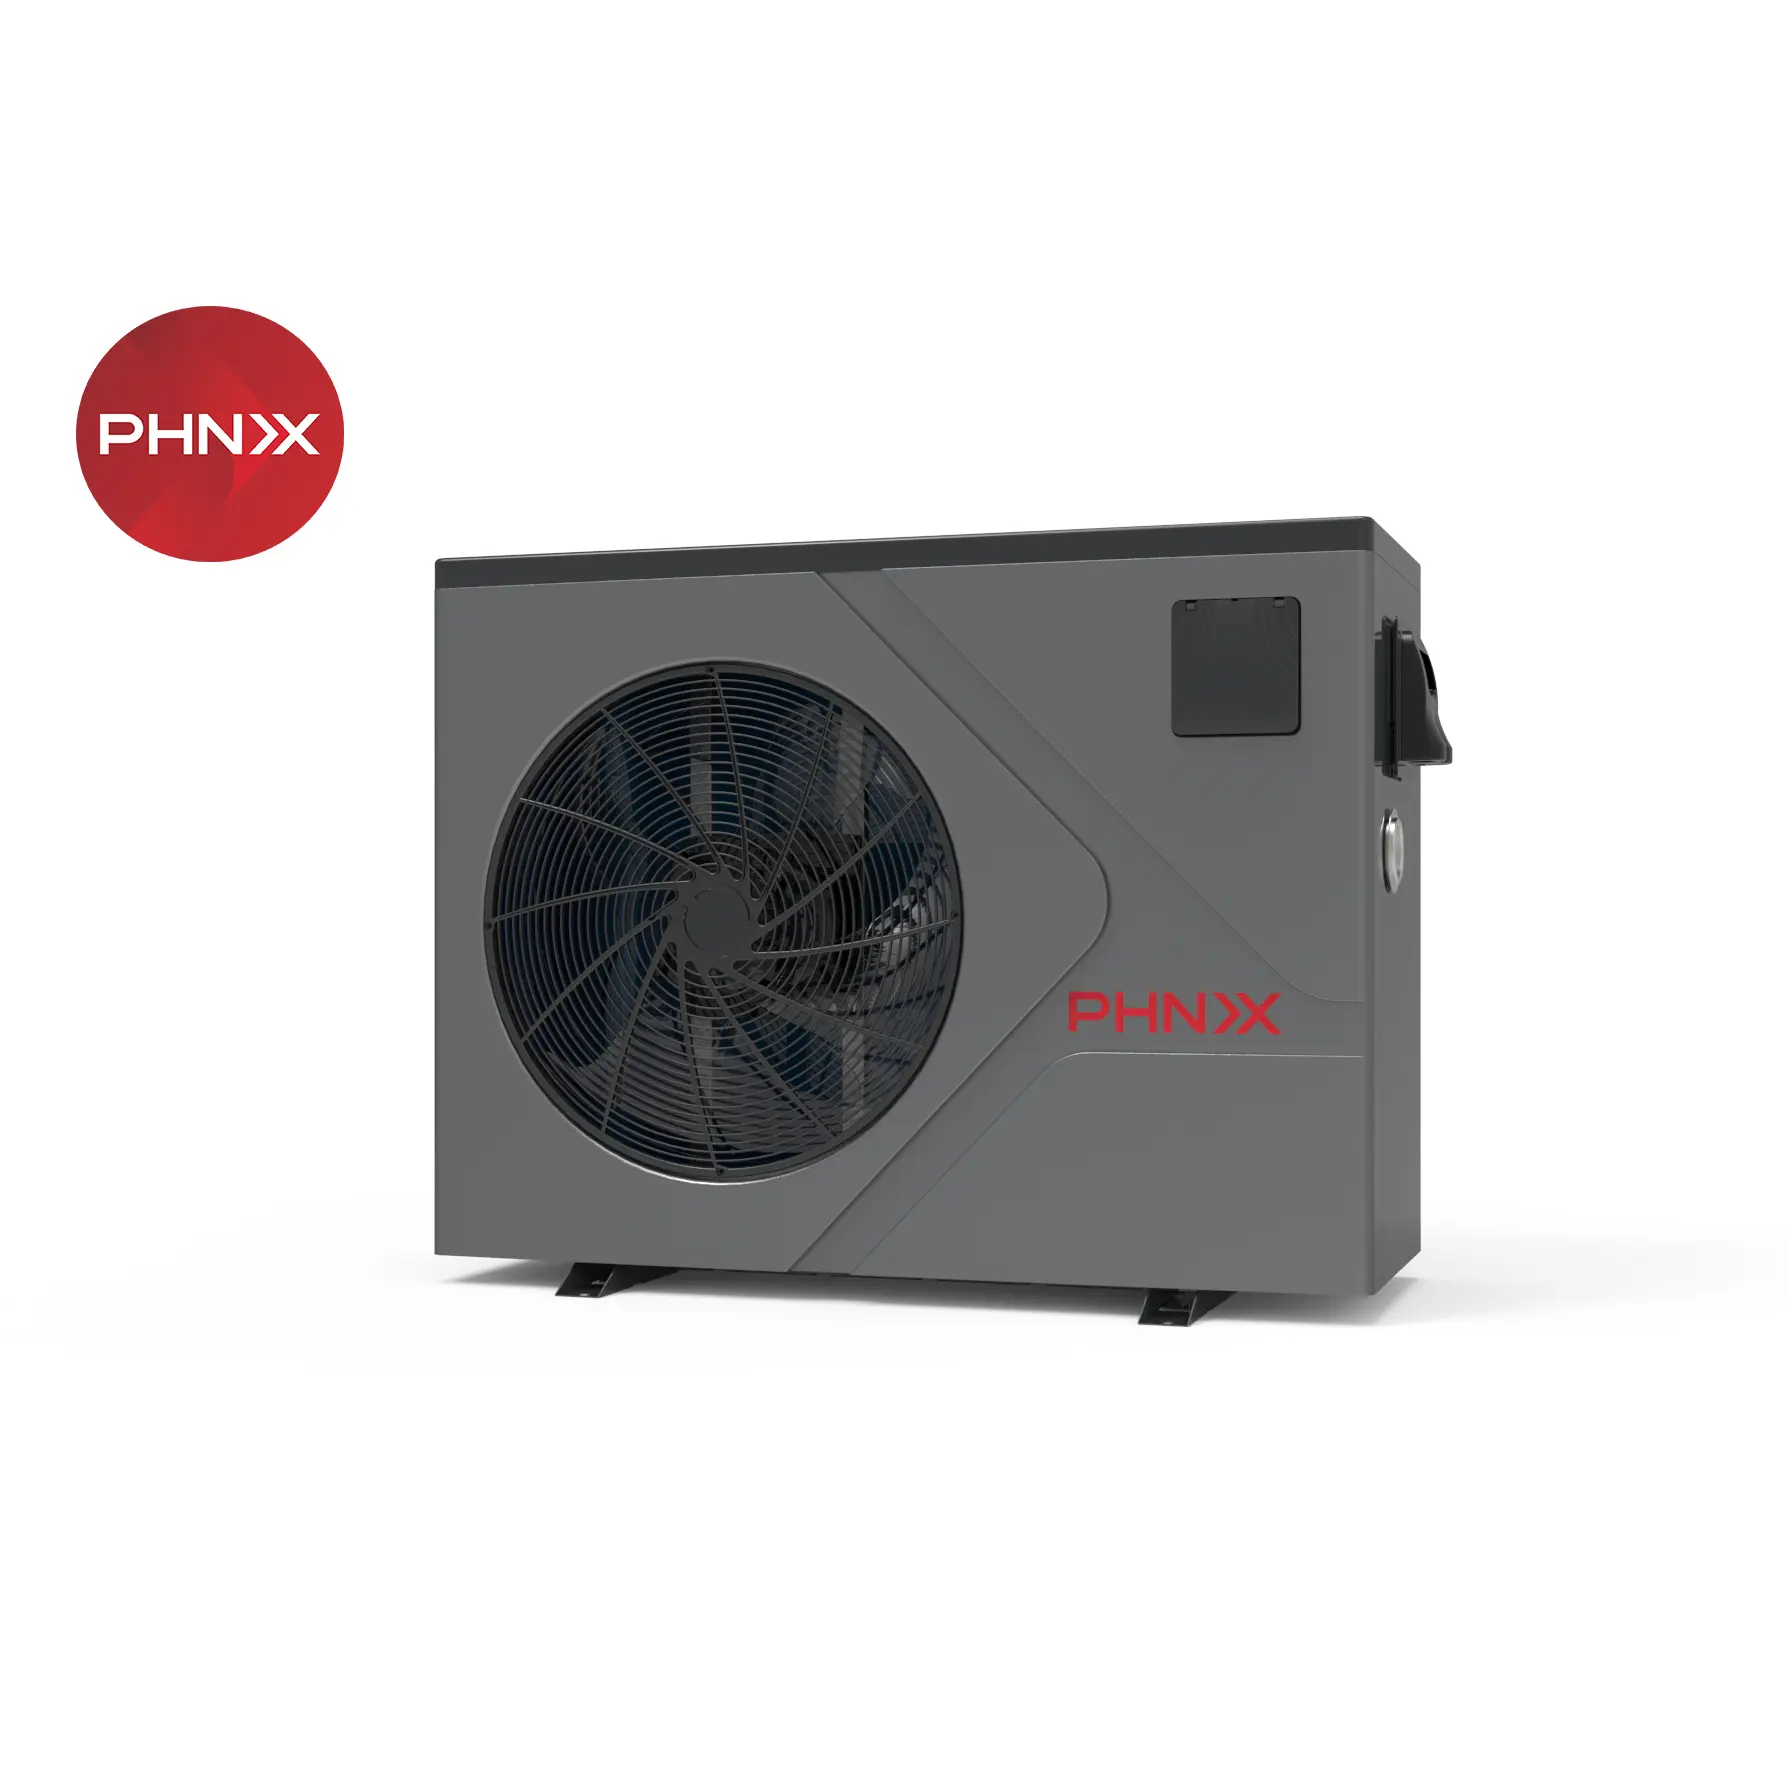 Phnix Volledige Inverter Warmtepomp R32 Outdoor Spa Verwarming Zwembad Warmtepomp Lucht Bron